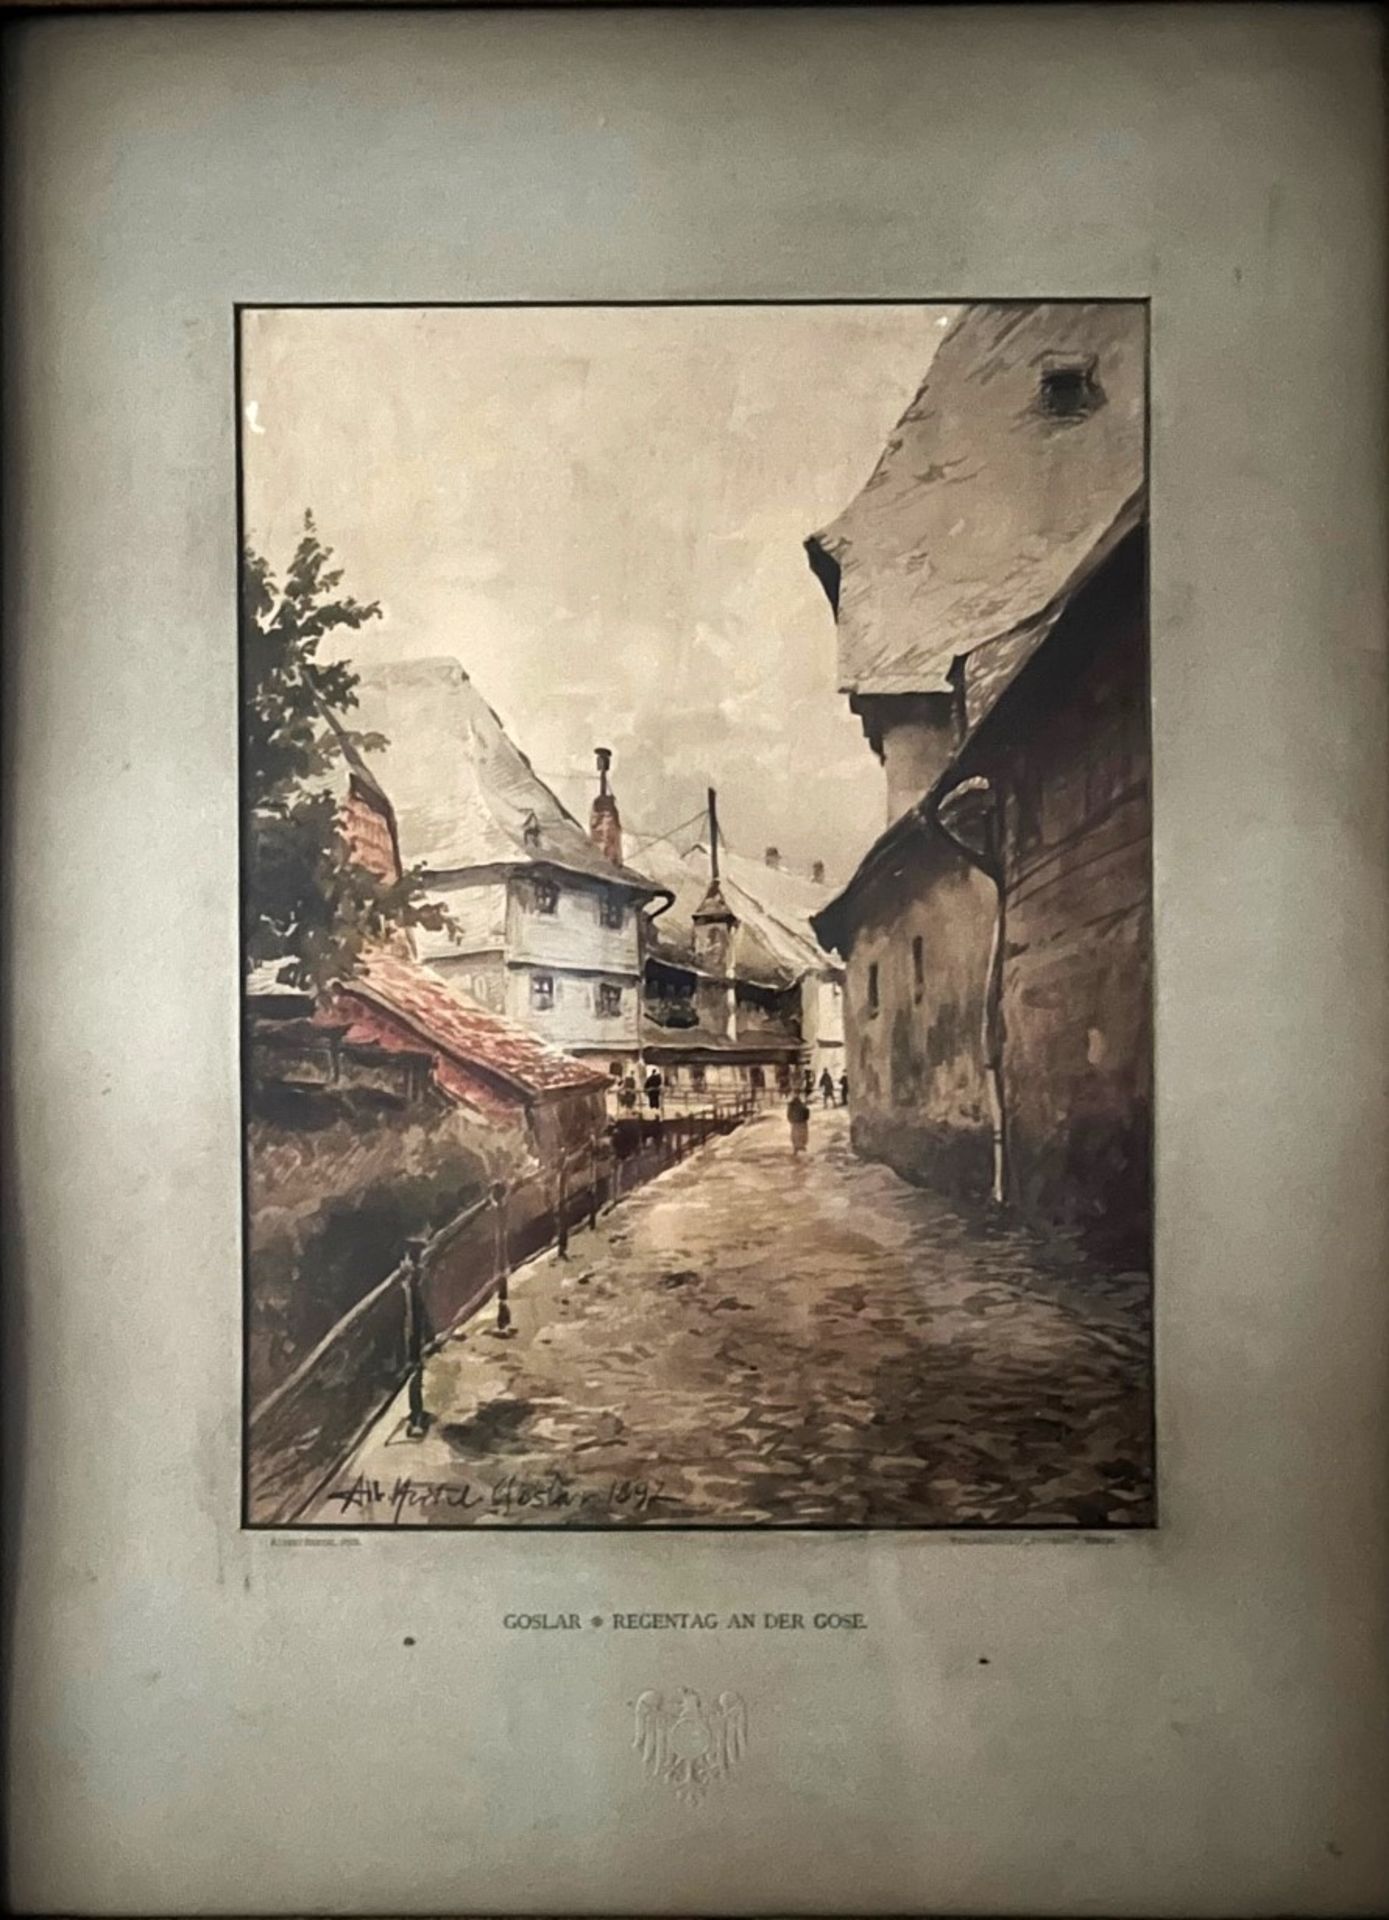 Farblithografie, Goslar-Regentag an der Gose, Ende 19. Jh. - Anfang des 20. Jh., deutsch